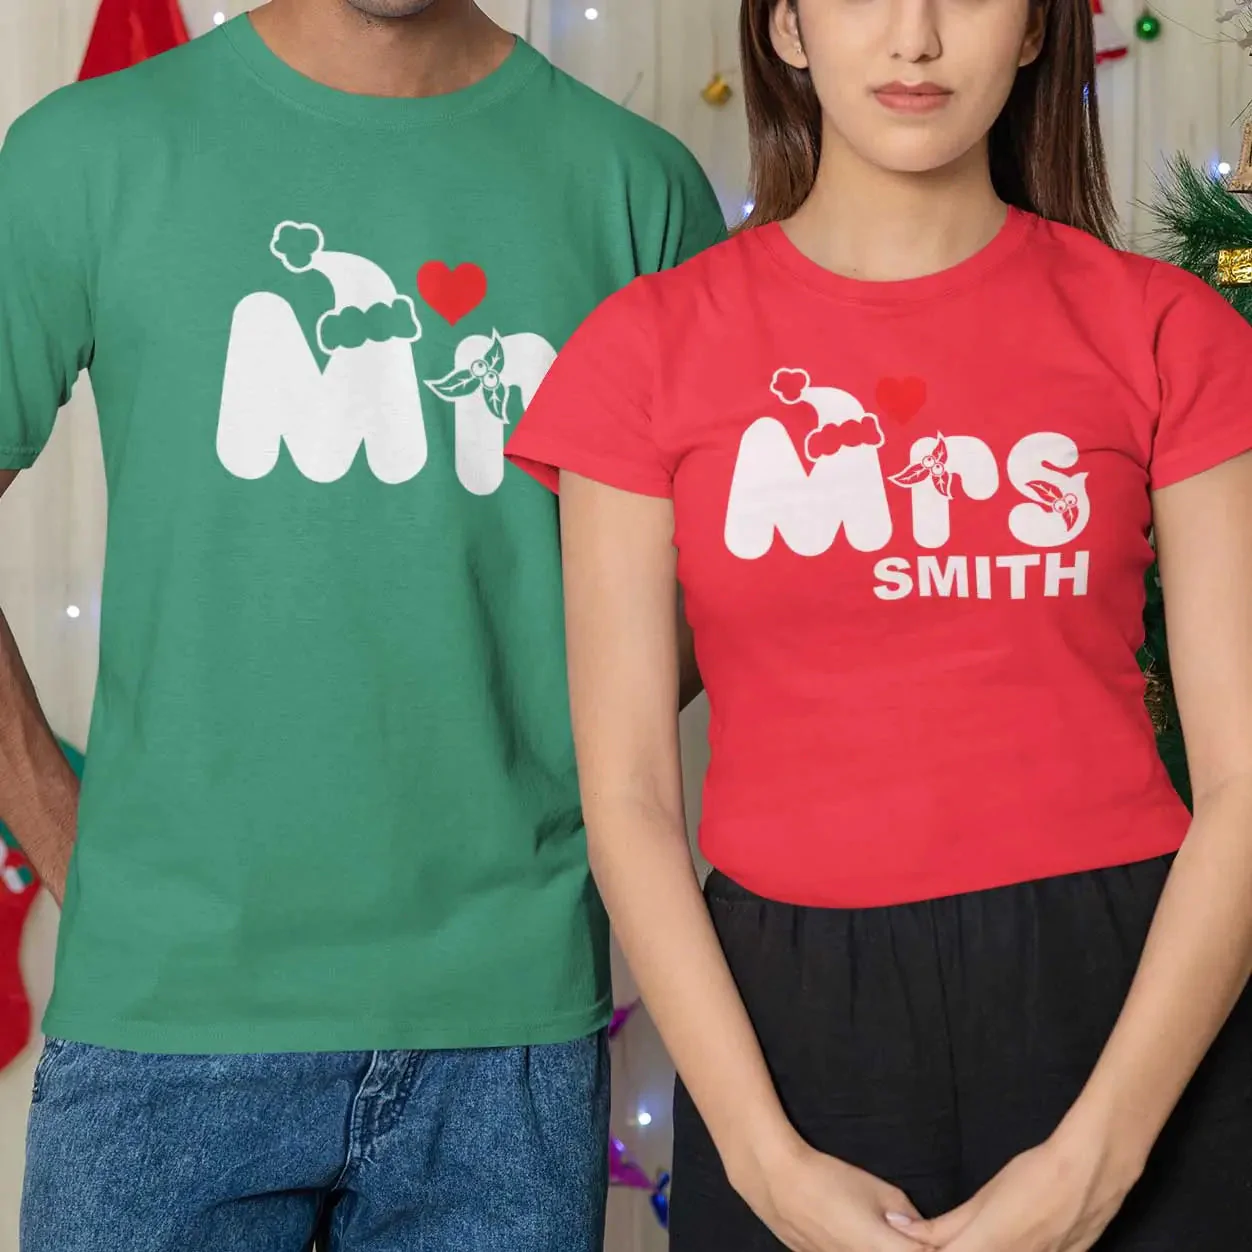 Mr And Mrs Shirts